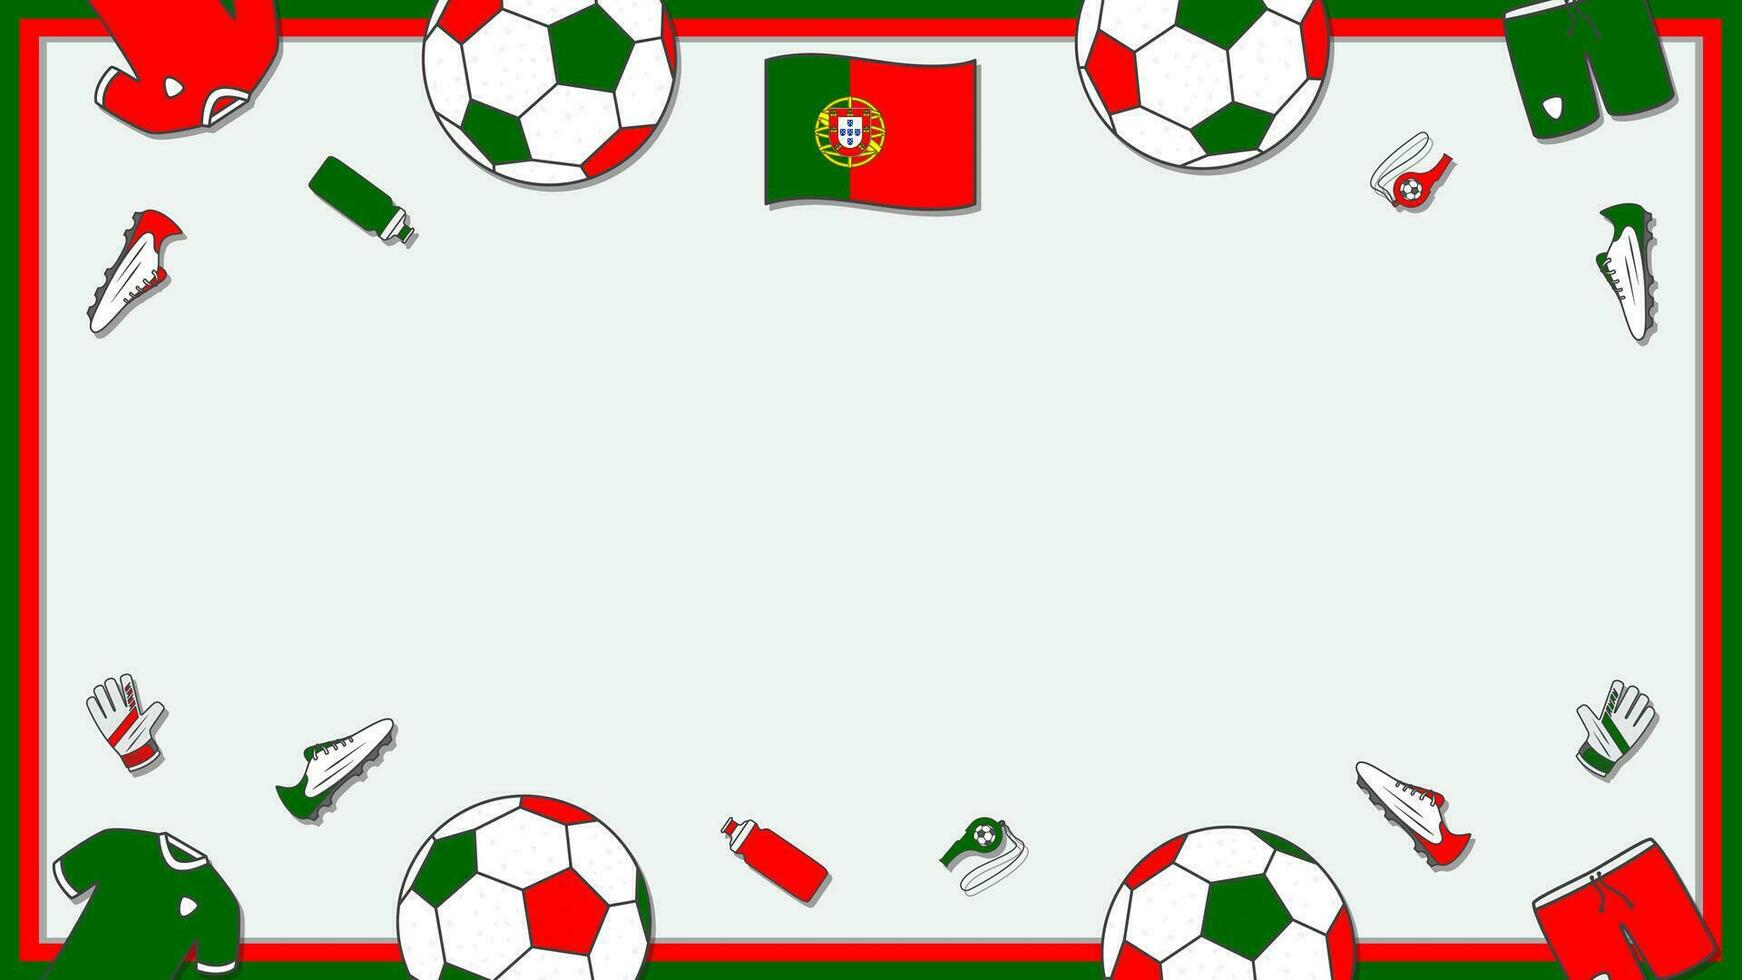 Football Background Design Template. Football Cartoon Vector Illustration. Championship In Portugal